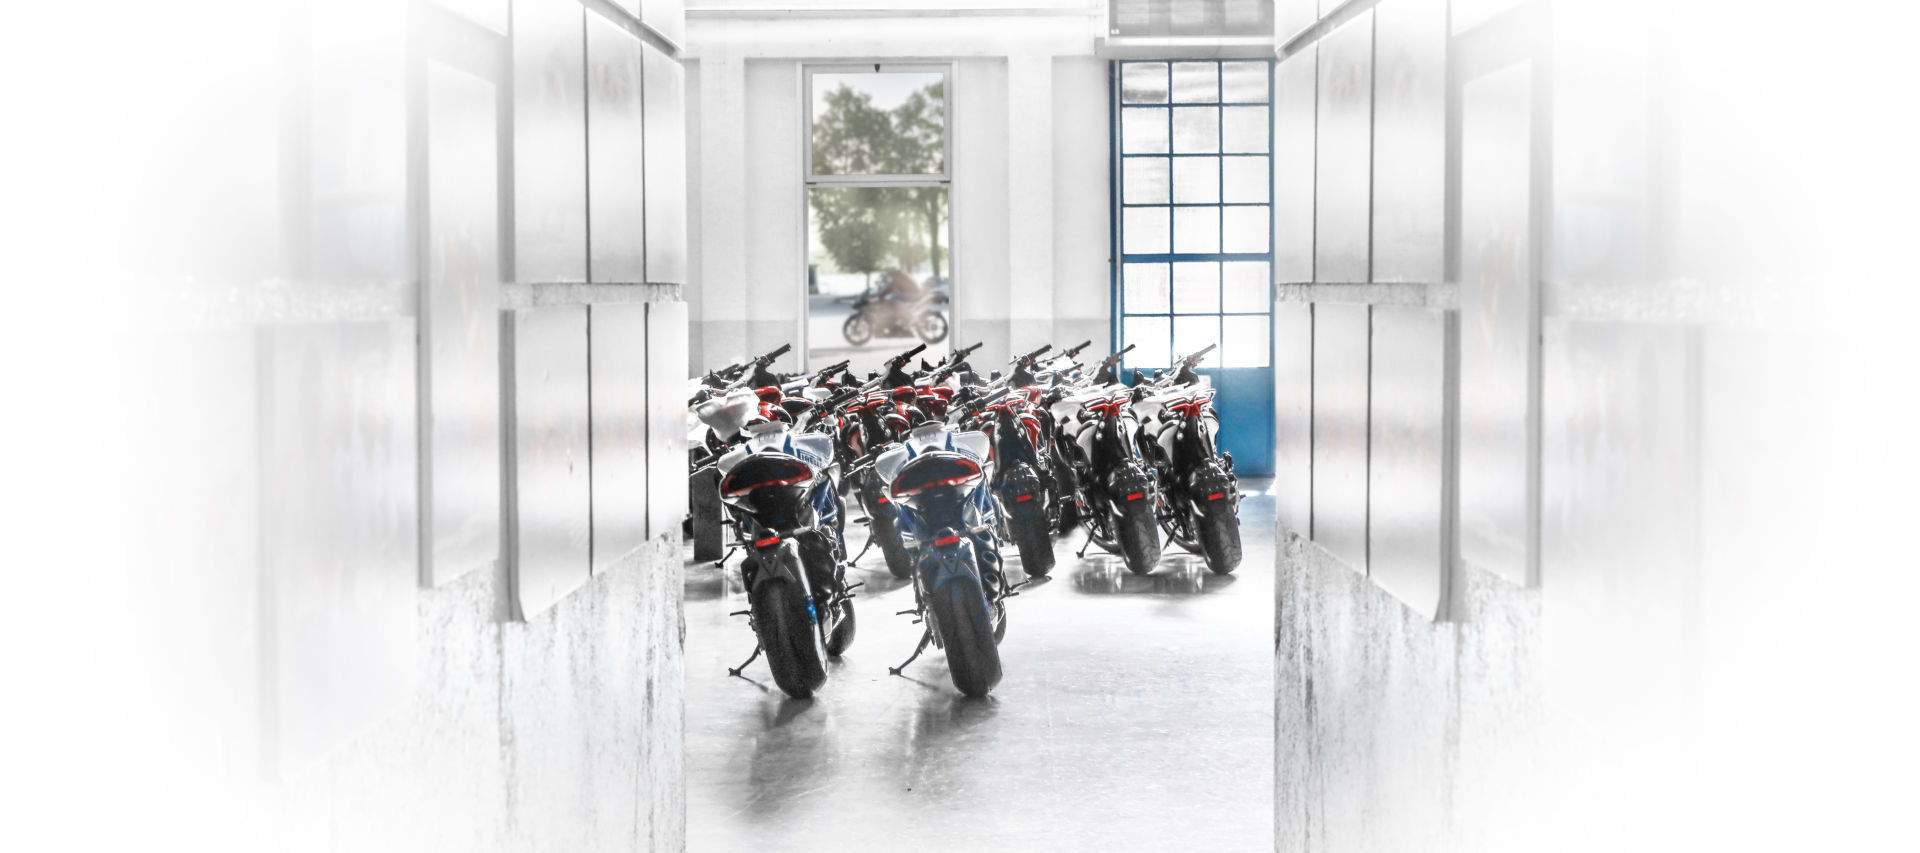 MV Agusta motorcycles in a storage area. Photo courtesy MV Agusta.